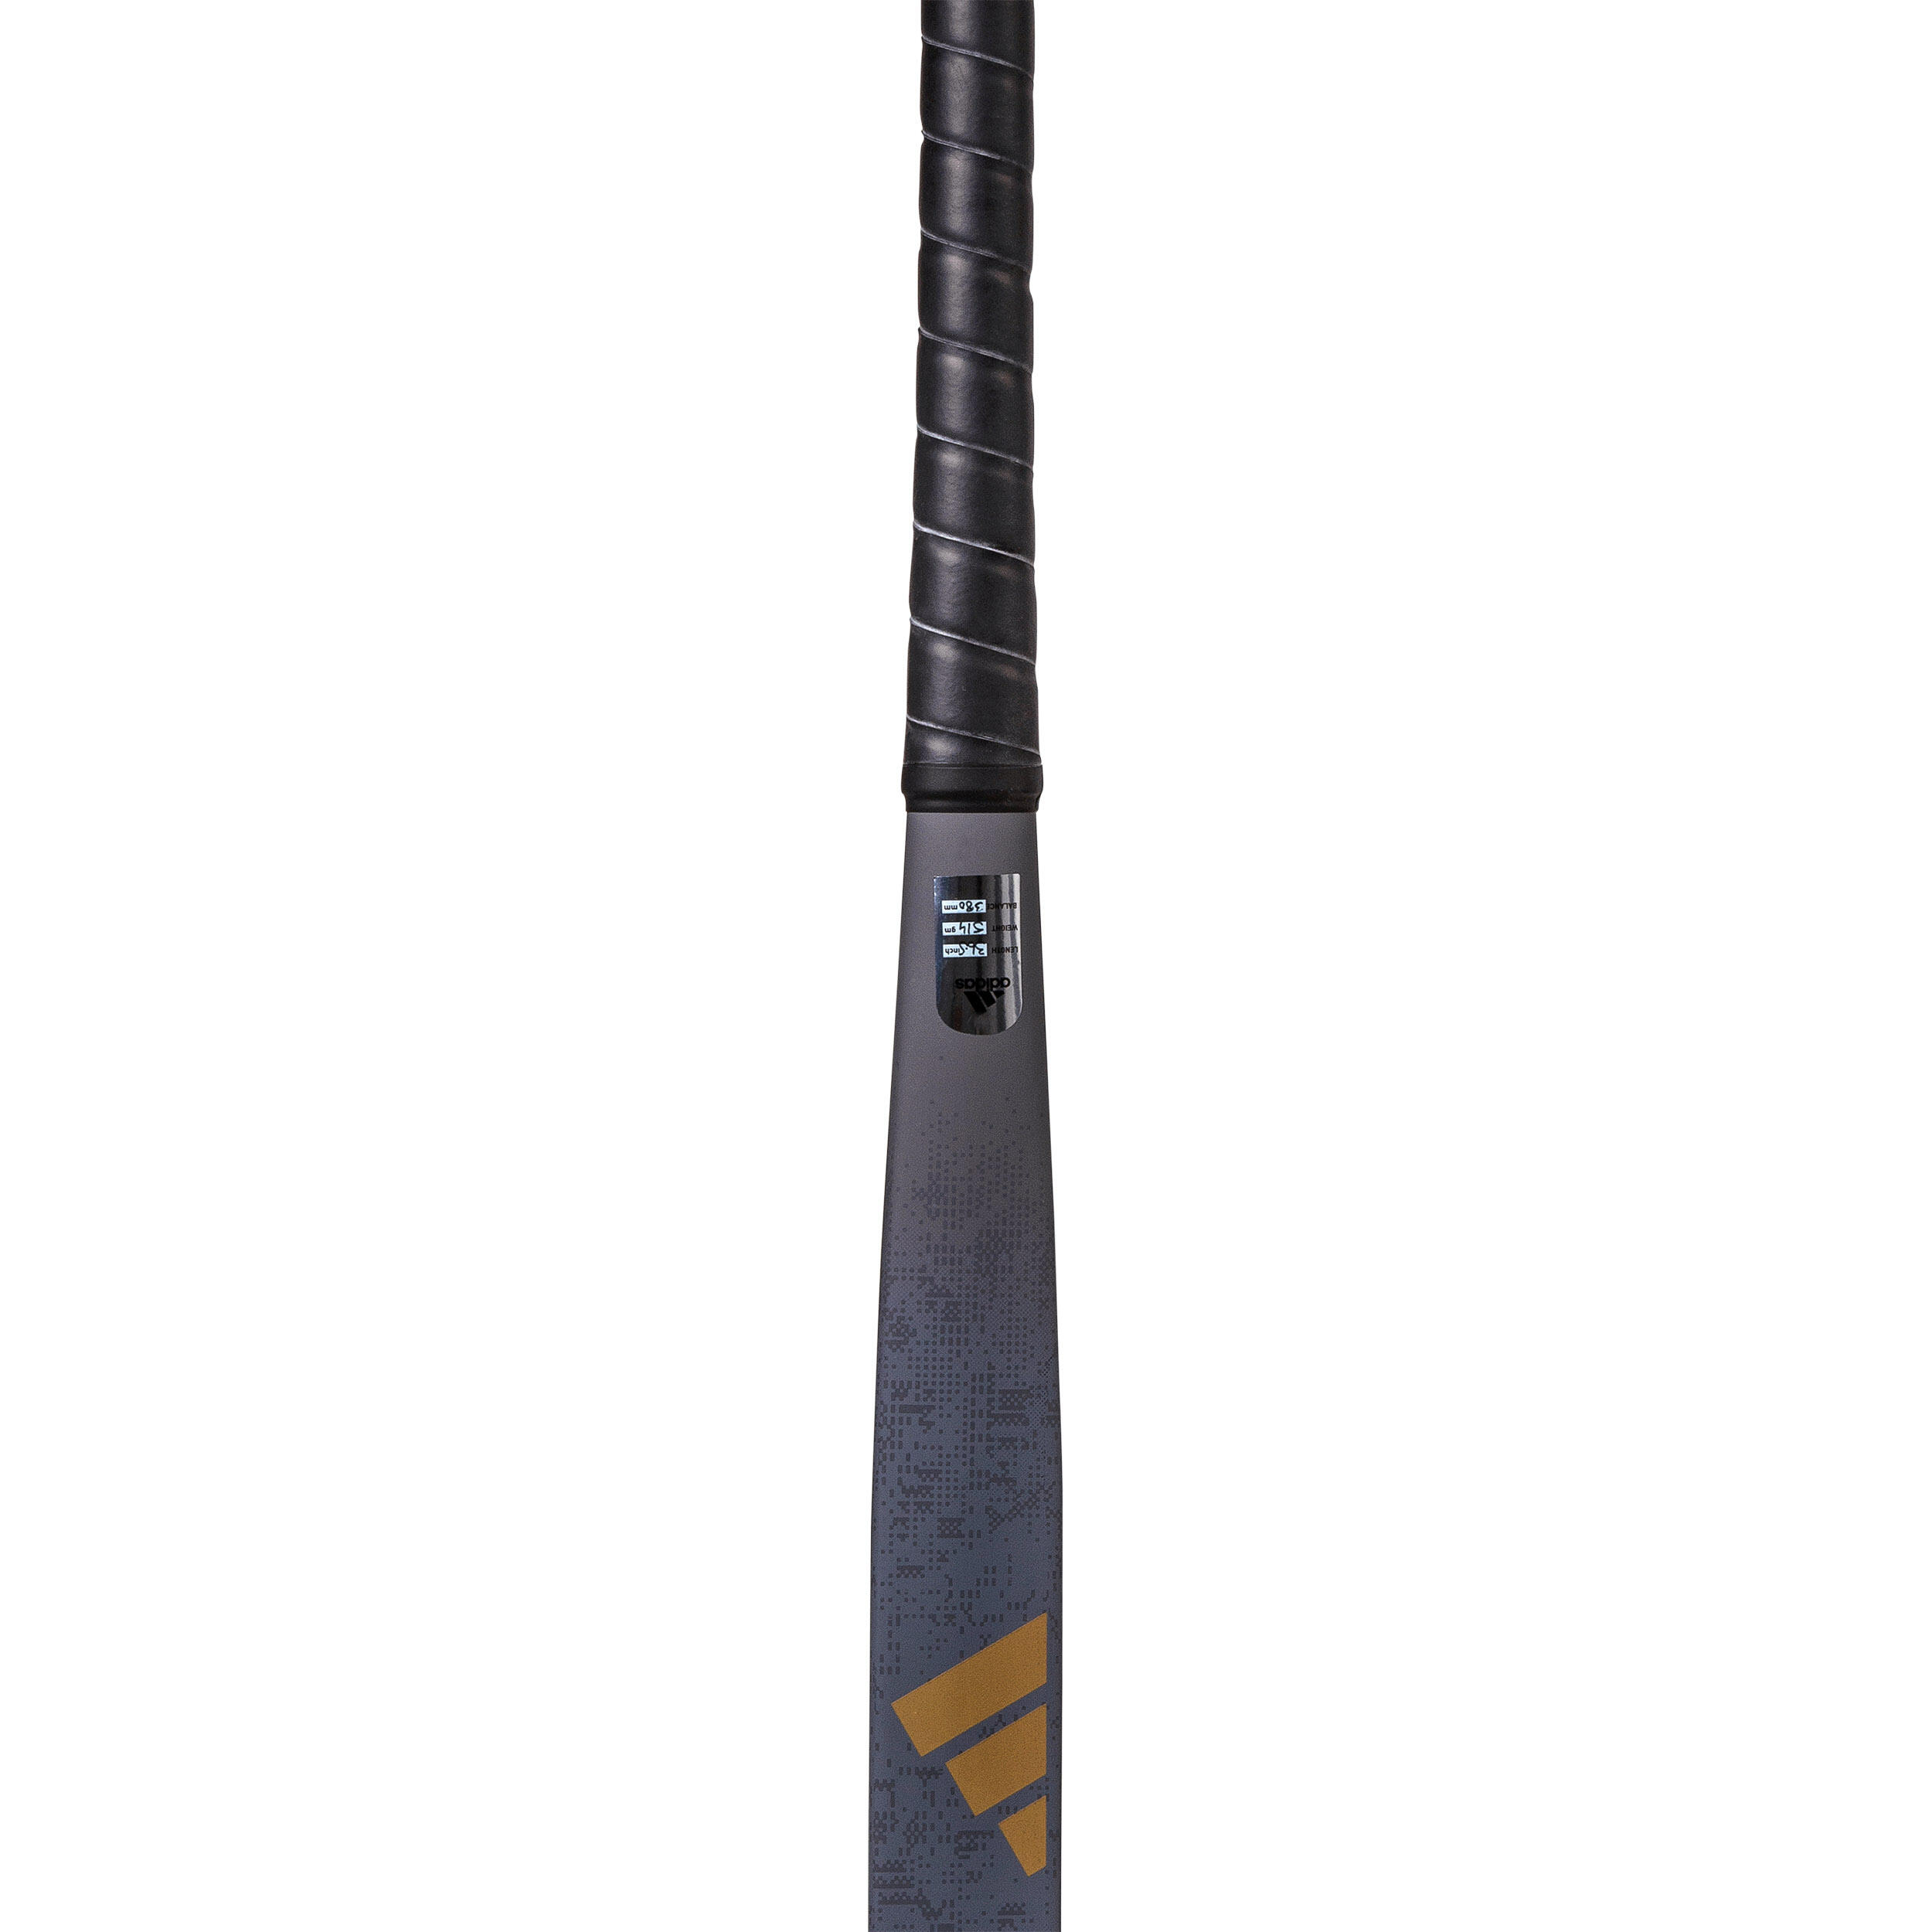 Adult Intermediate 20% Carbon Mid Bow Field Hockey Stick Estro .7 - Black/GoldBlack and gold 5/13